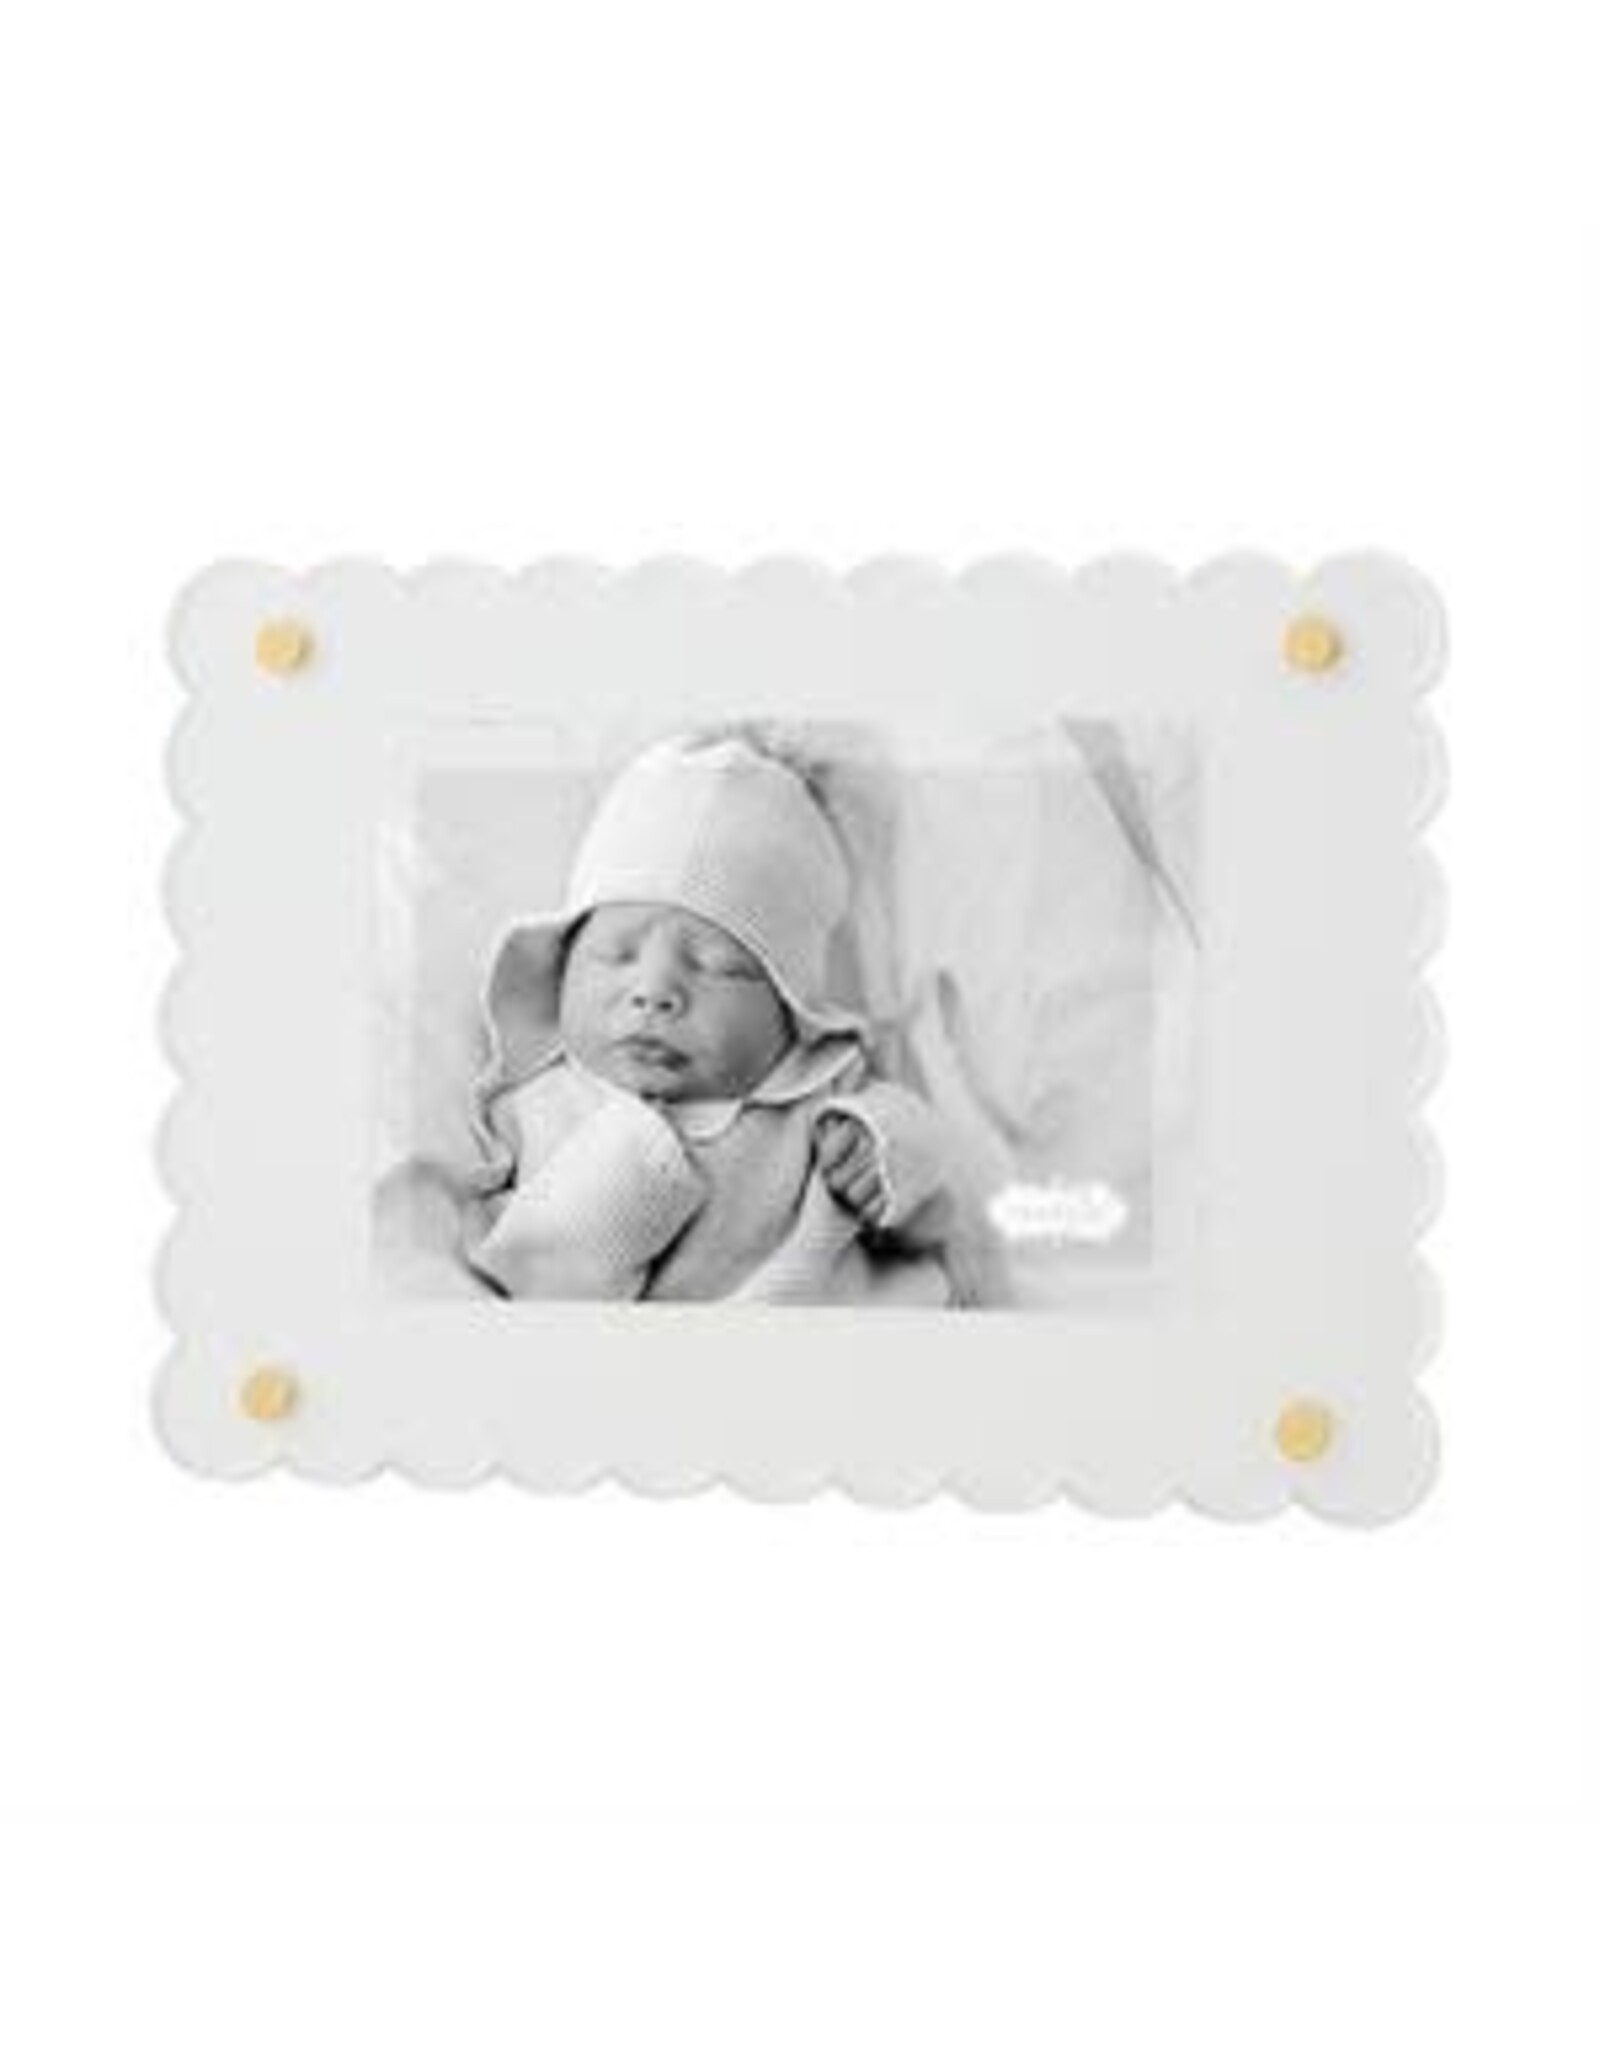 White Scalloped Acrylic Frame 5 x 7 16900008